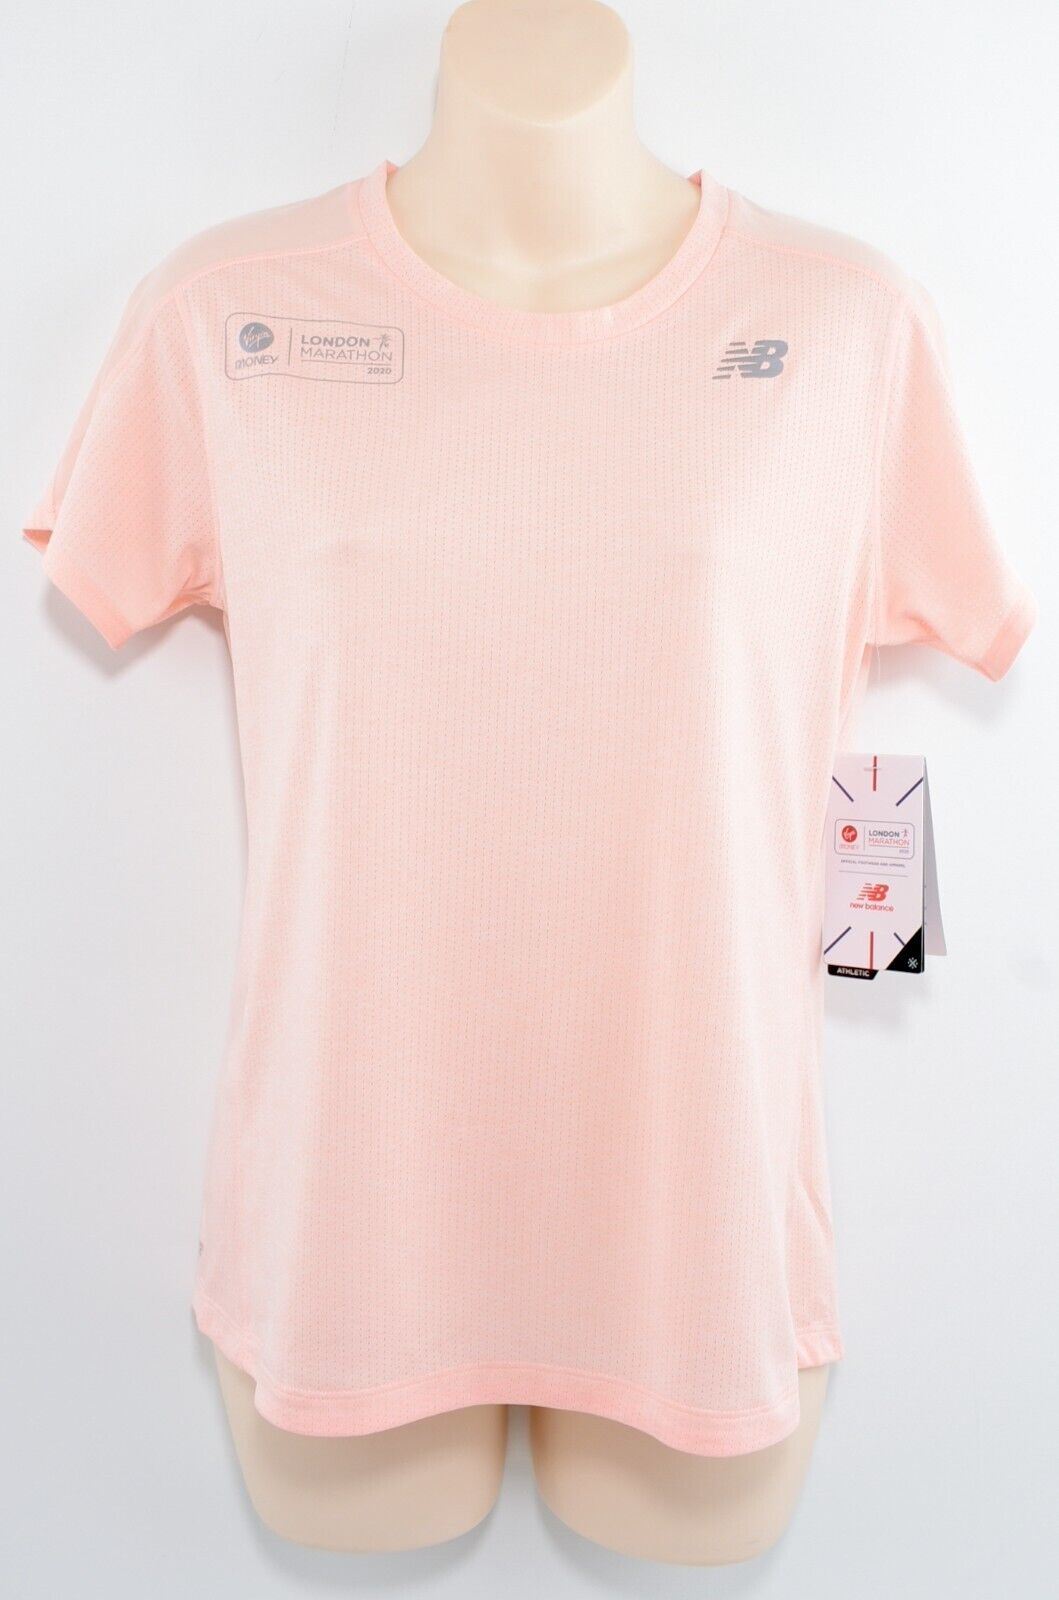 NEW BALANCE Women's LONDON MARATHON Impact Run T-shirt, Light Rose Pink, size S